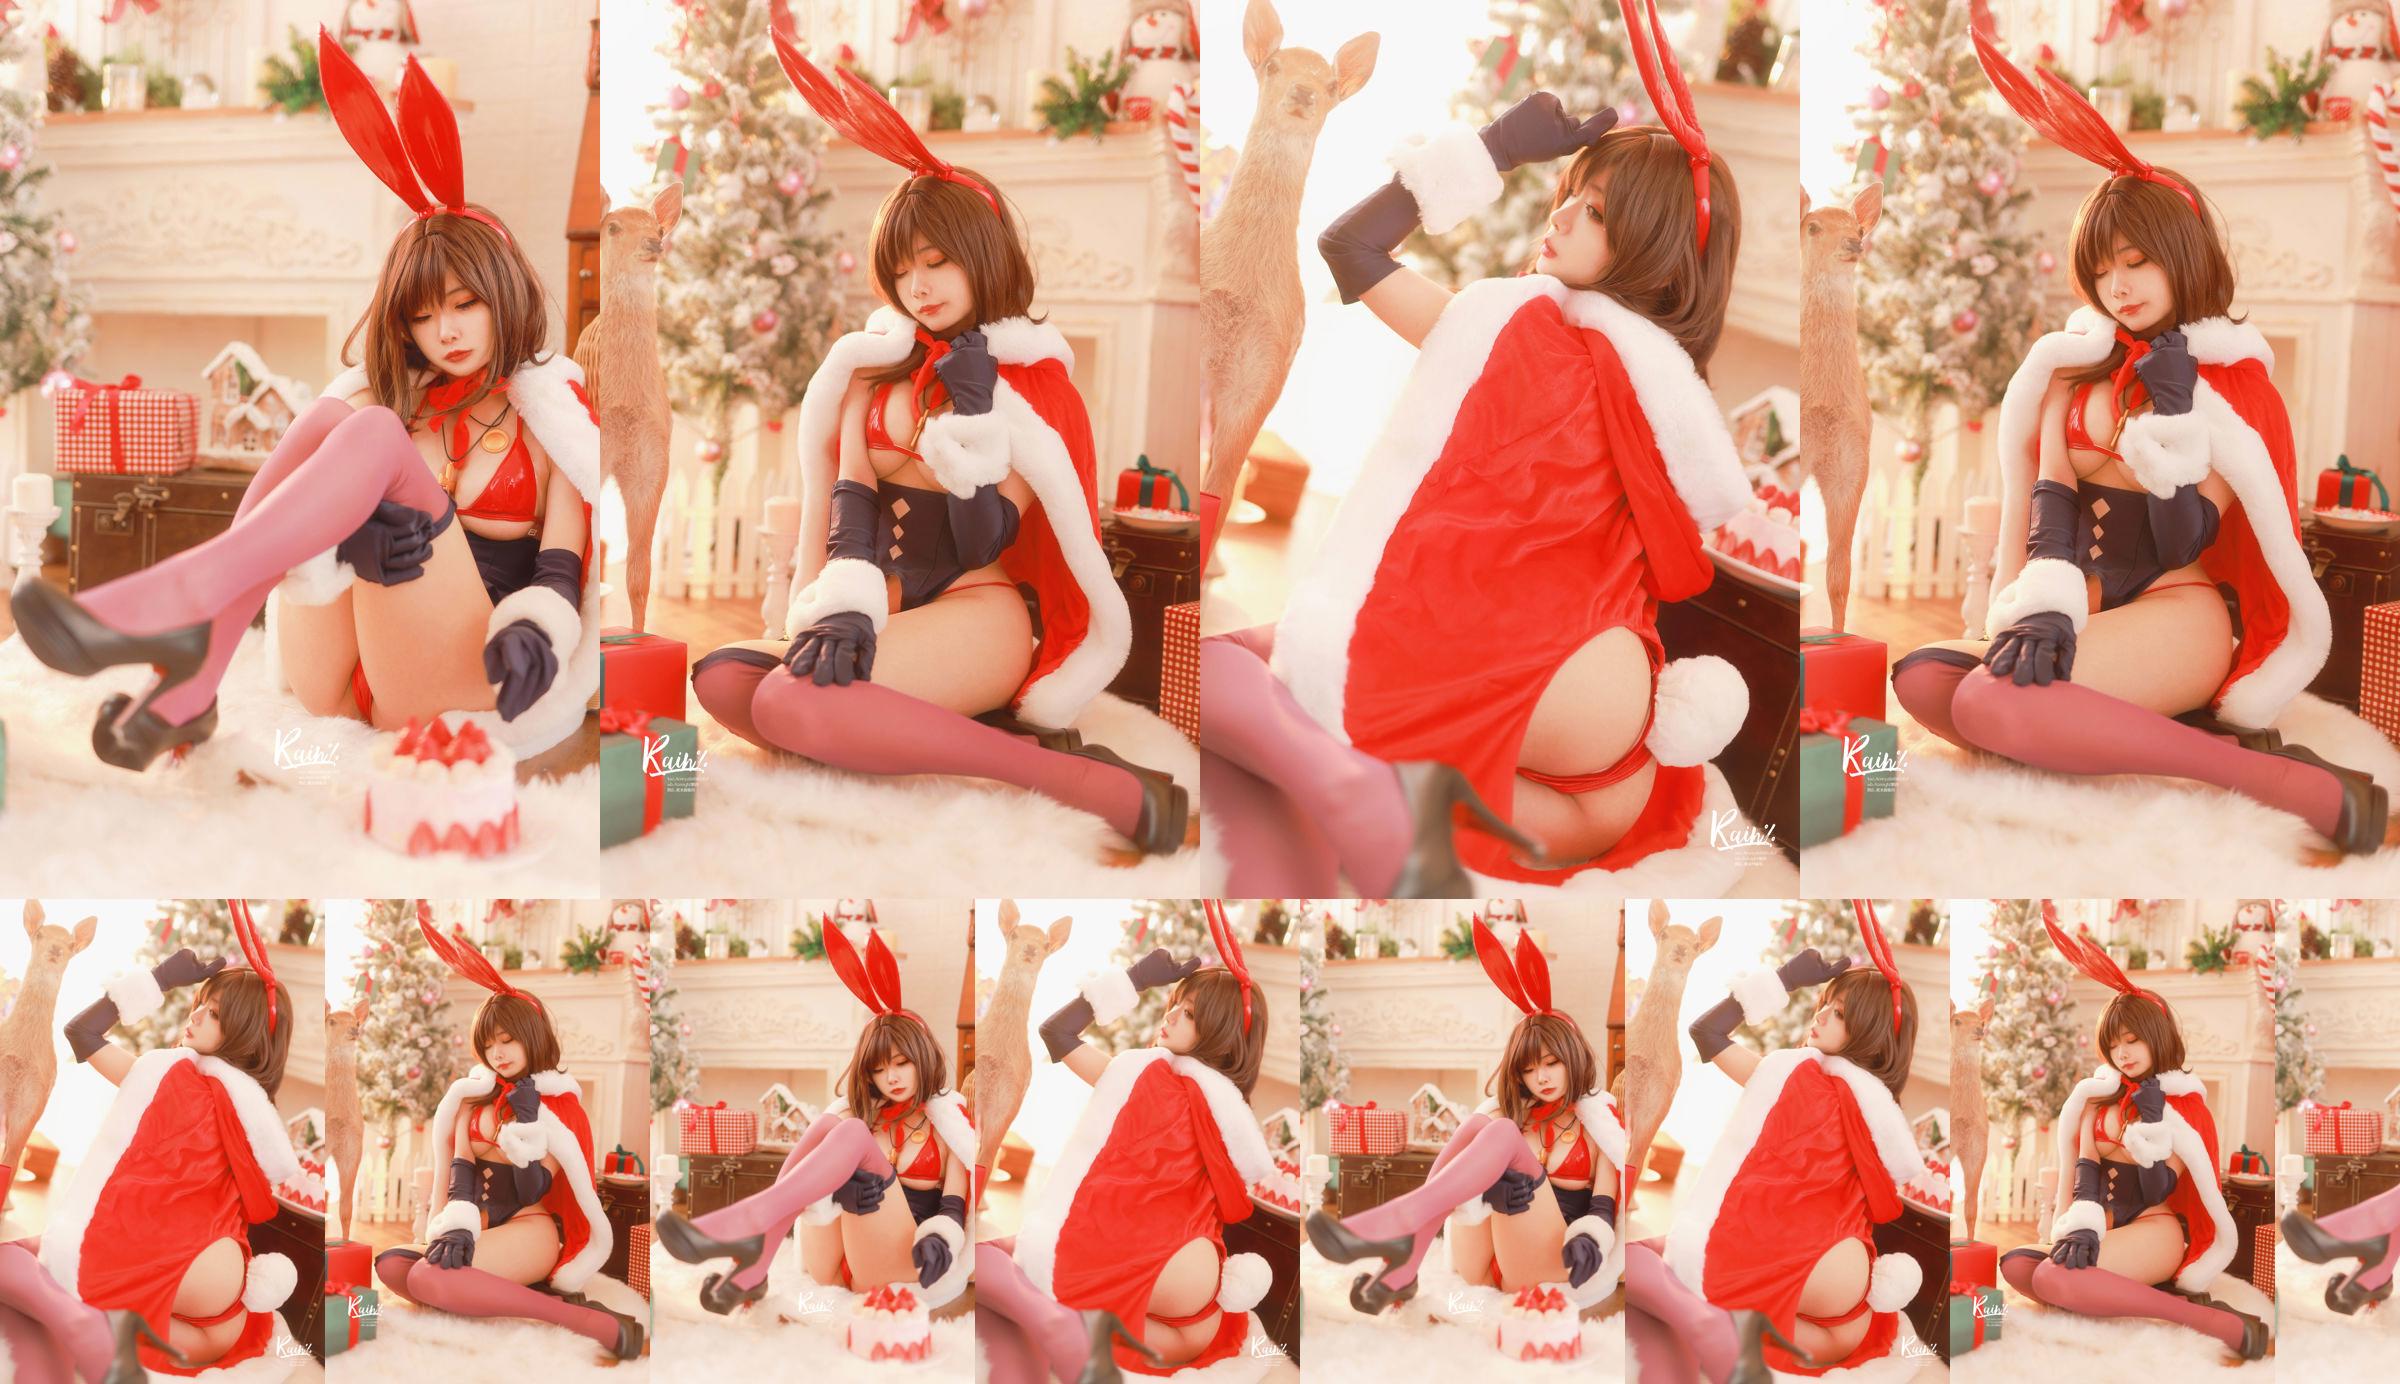 [Net Red COSER Photo] Bloger anime Rainight 魈雨-Christmas Rabbit No.83e447 Strona 1